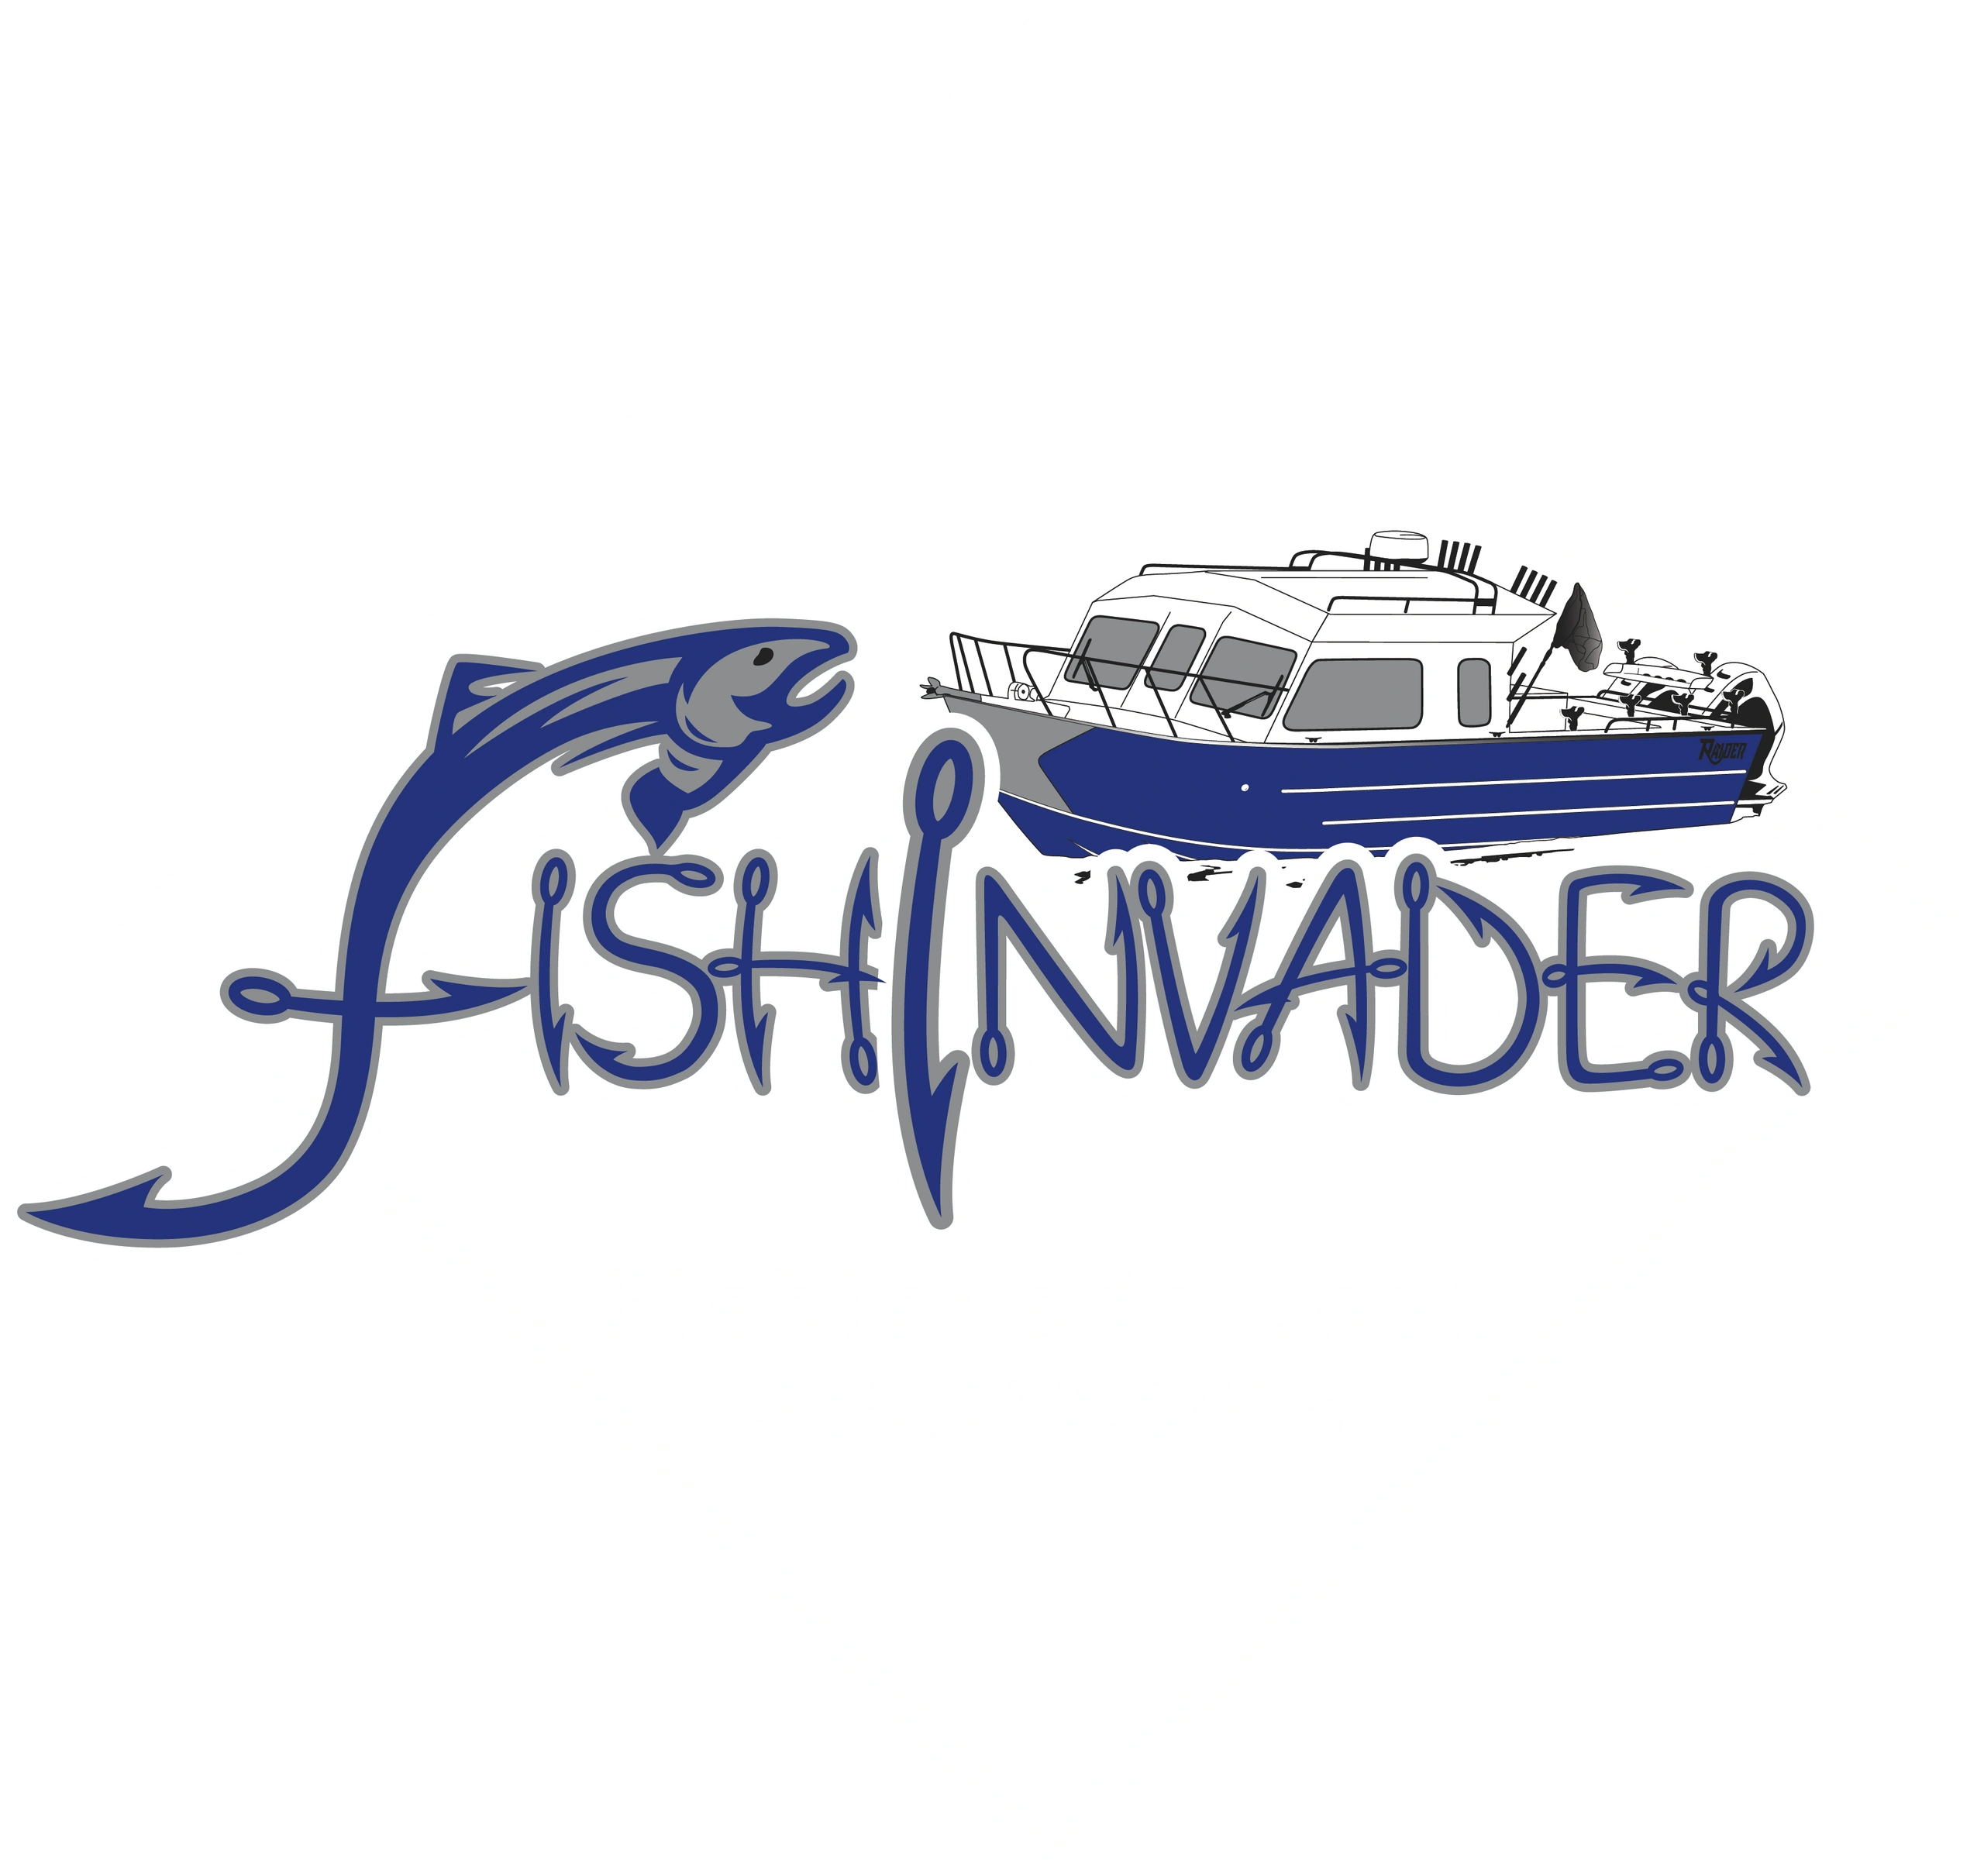 Fish Invader Sportfishing - Fishing, Tours, Team Building